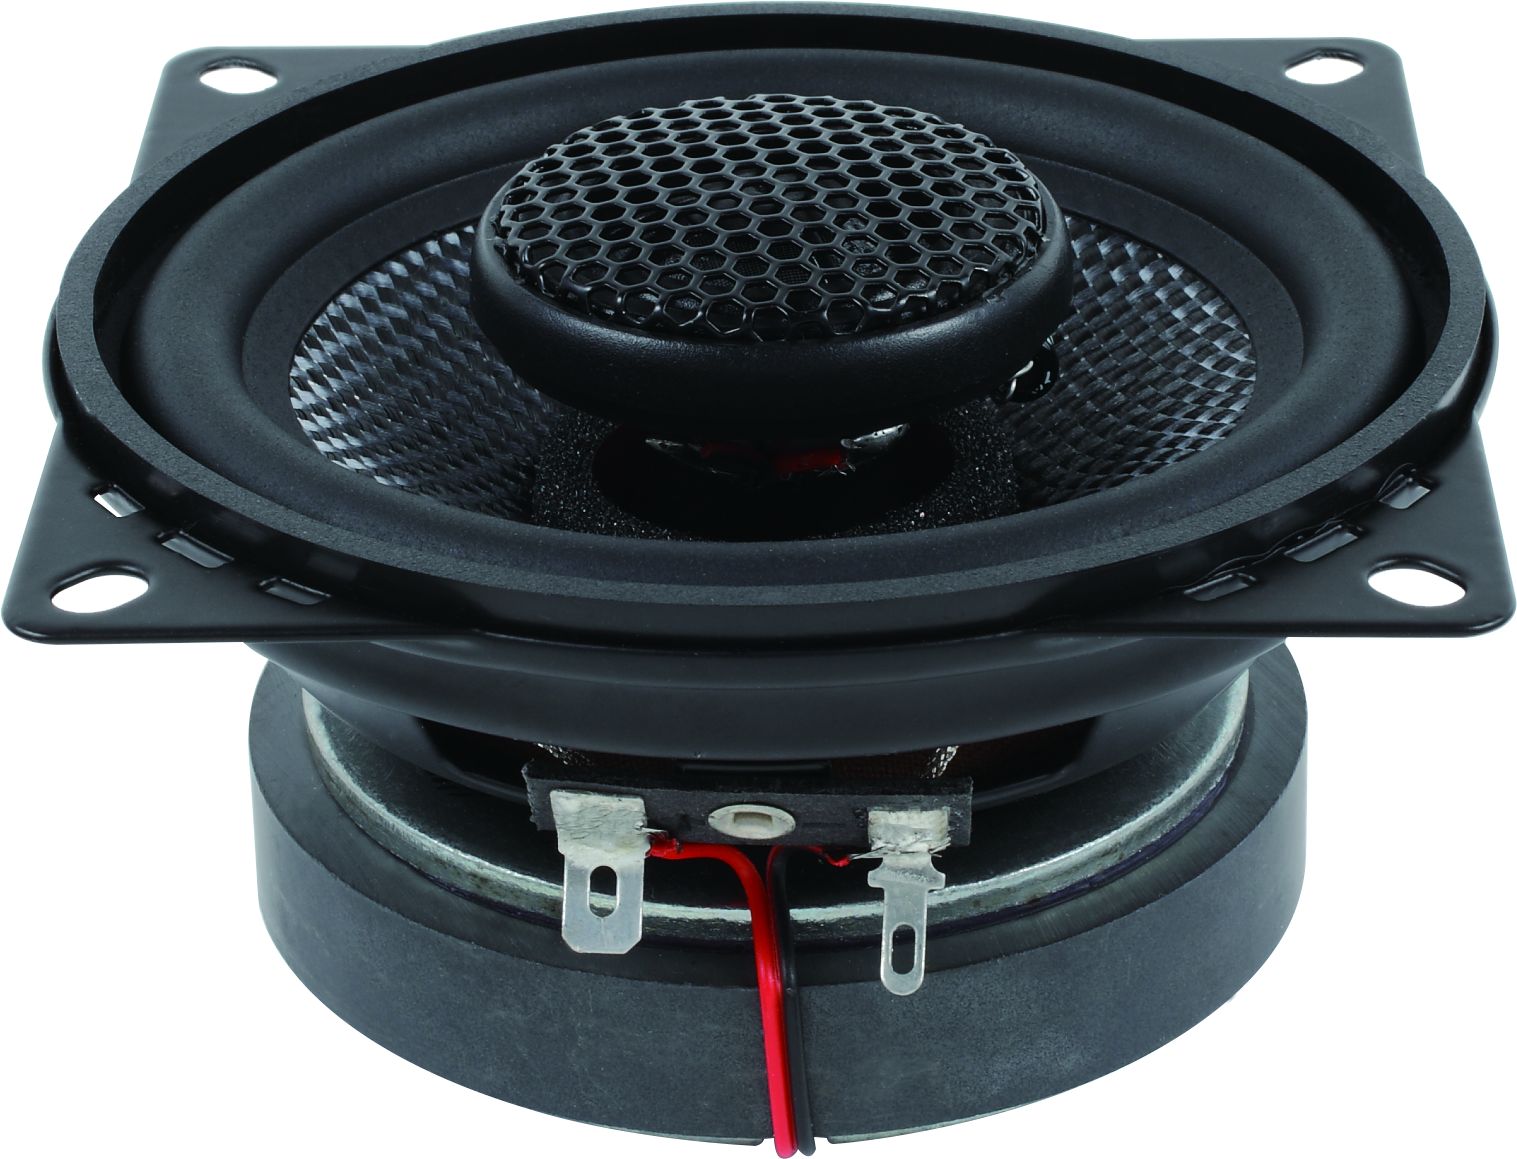 ATG ATG-TS402 - ATG Audio Transcend Series 4" Coaxial Speakers